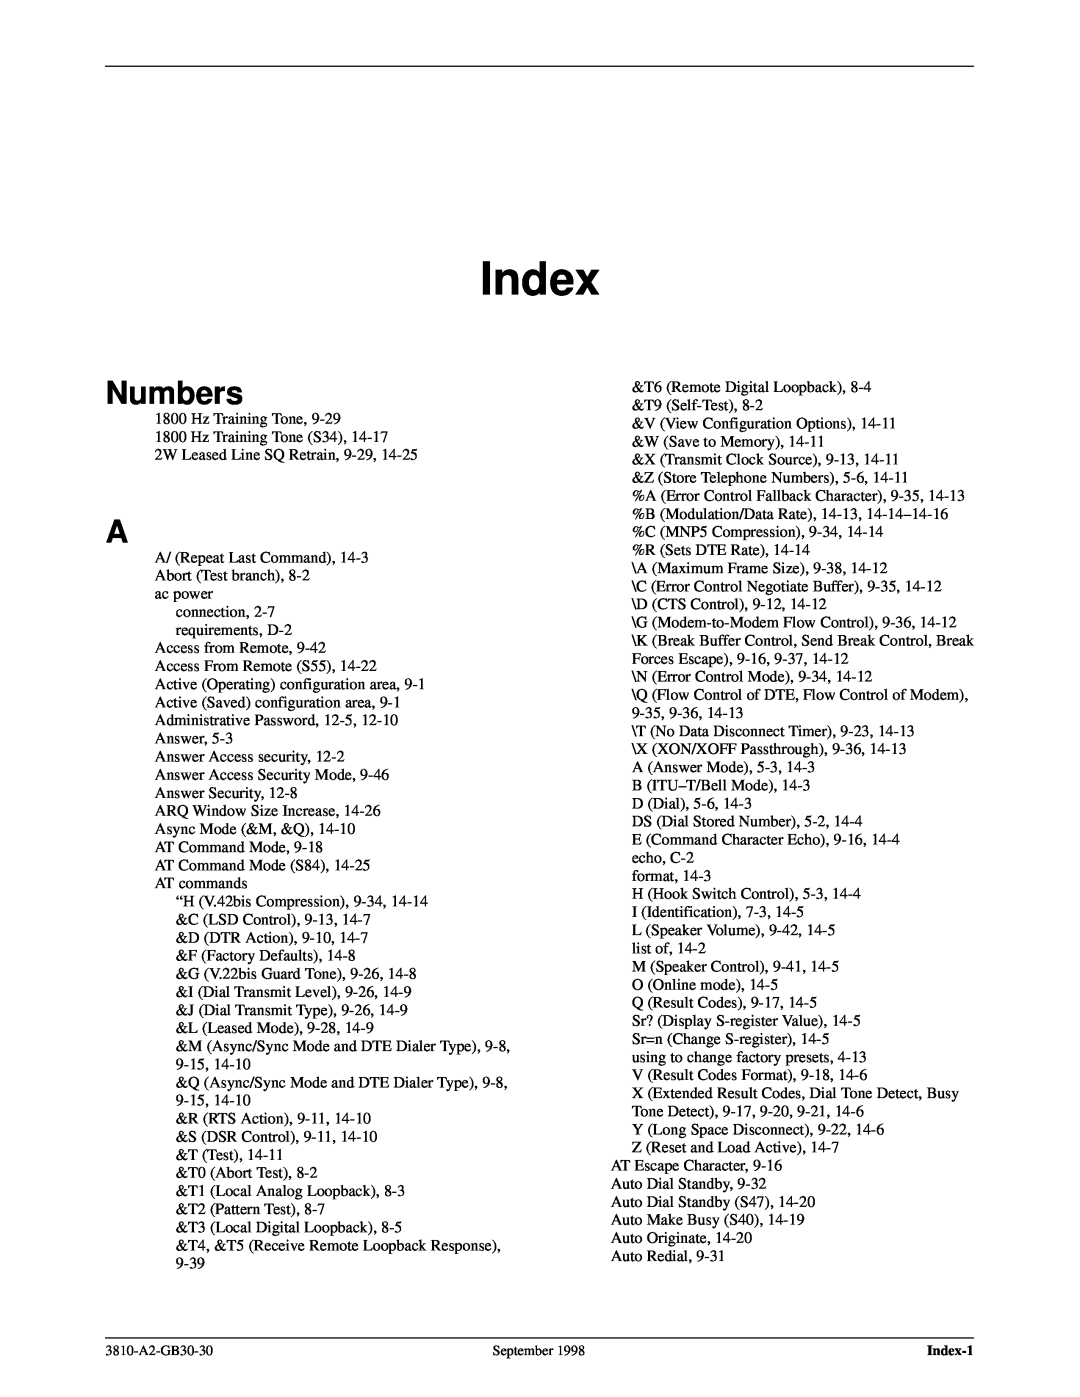 Paradyne 3800 manual Index, Numbers 